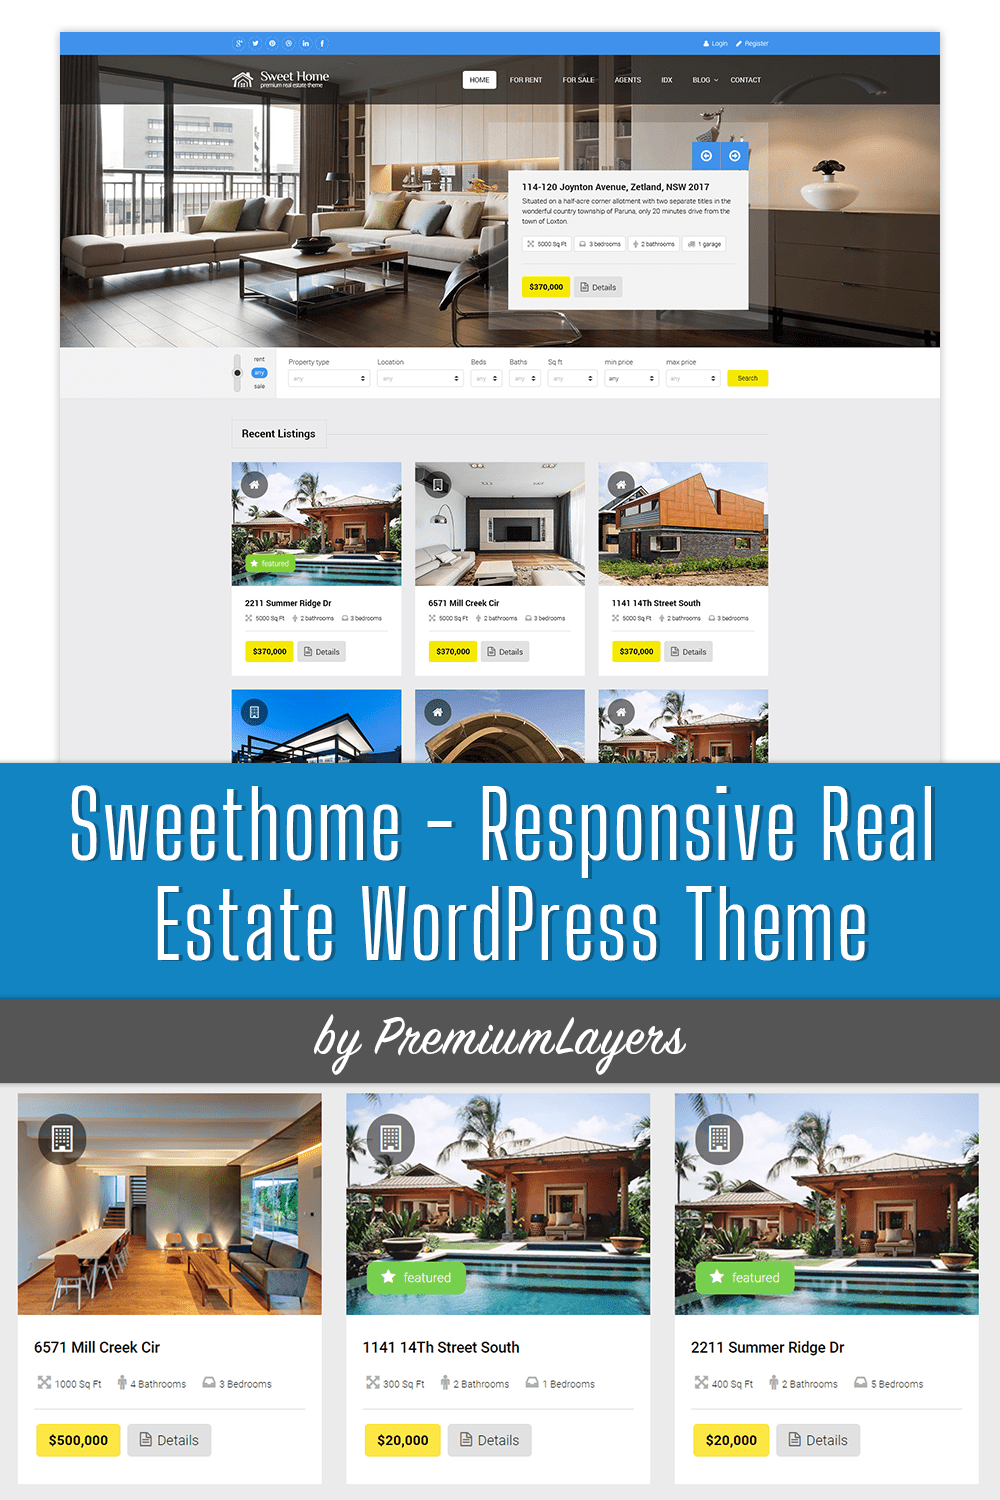 Sweethome - Responsive Real Estate WordPress Theme - Pinterest.